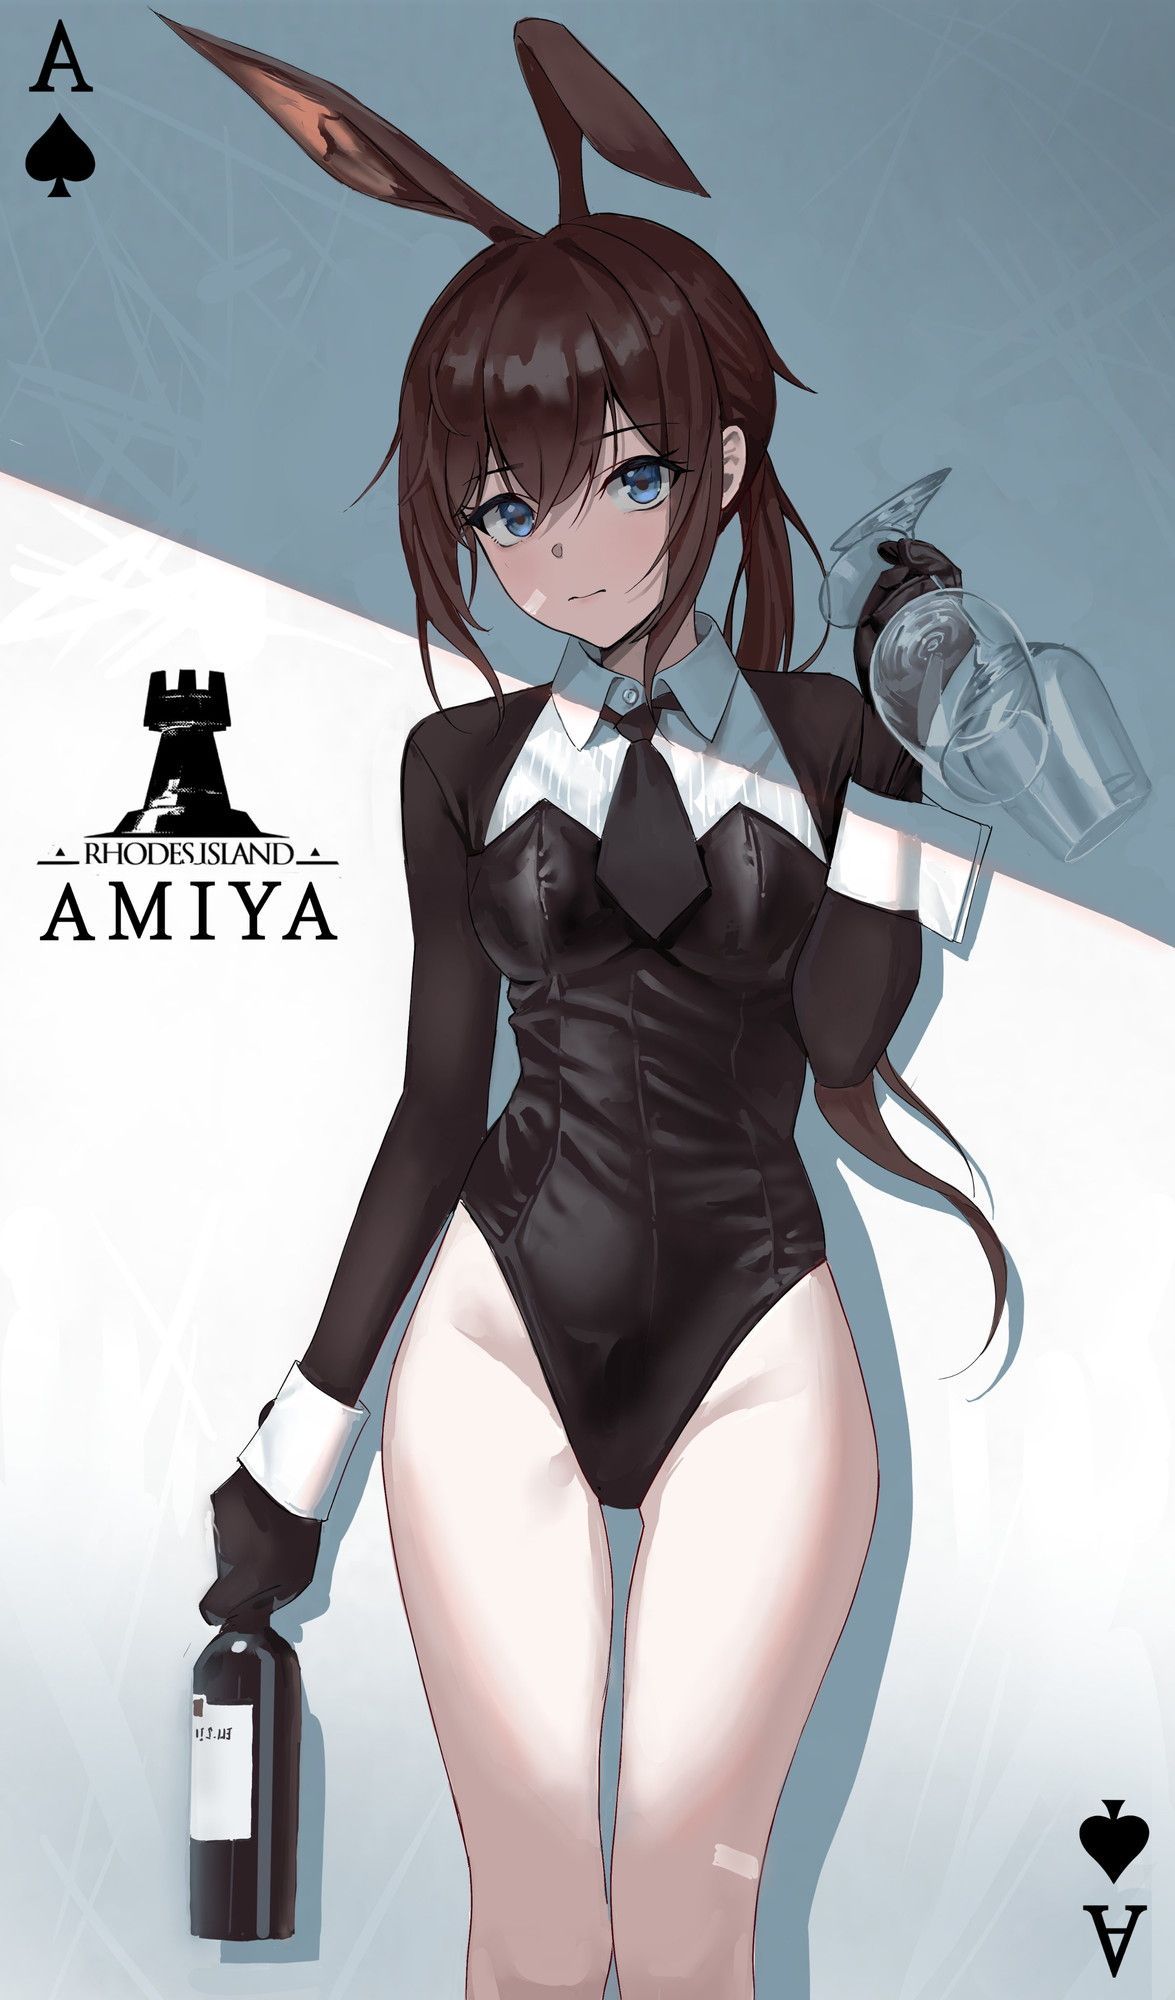 【ARK KNIGHTS】Amiya's Moe &amp; Erotic Image (5) 【Ark of Tomorrow】 14